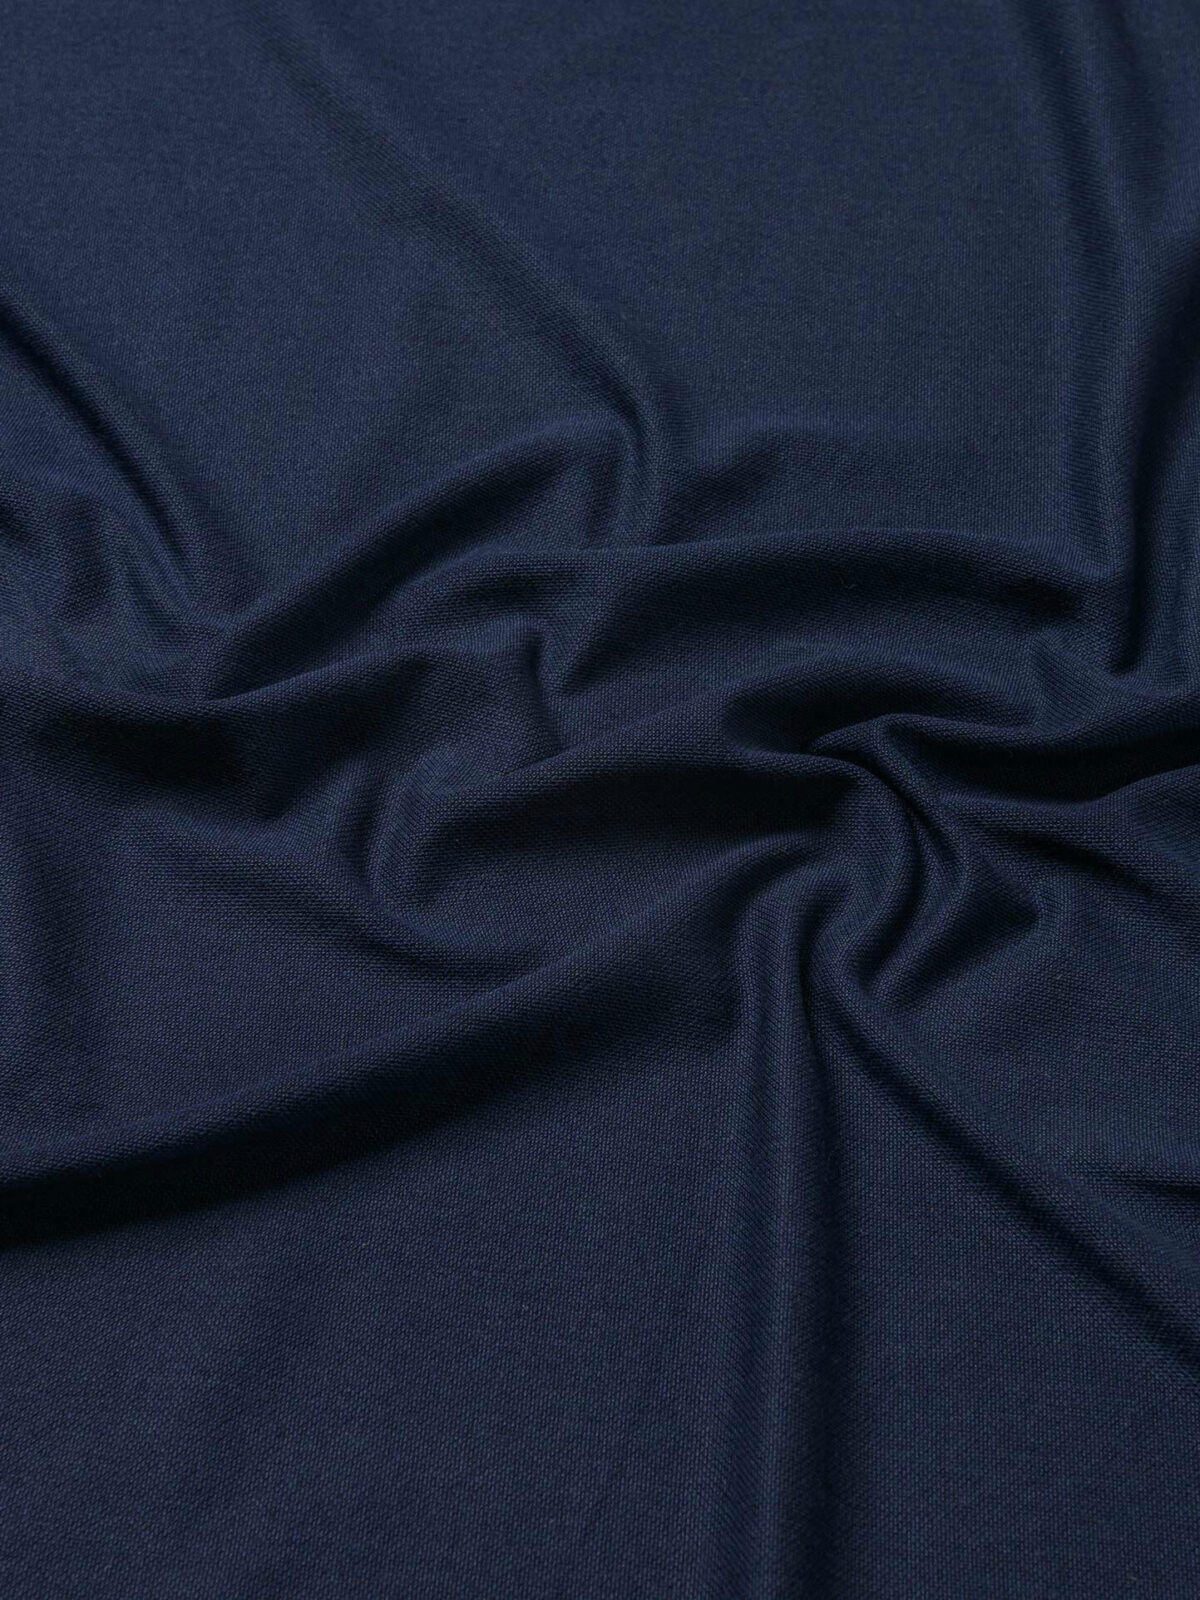 Carmel Navy Cotton and Tencel Pique Shirts by Proper Cloth